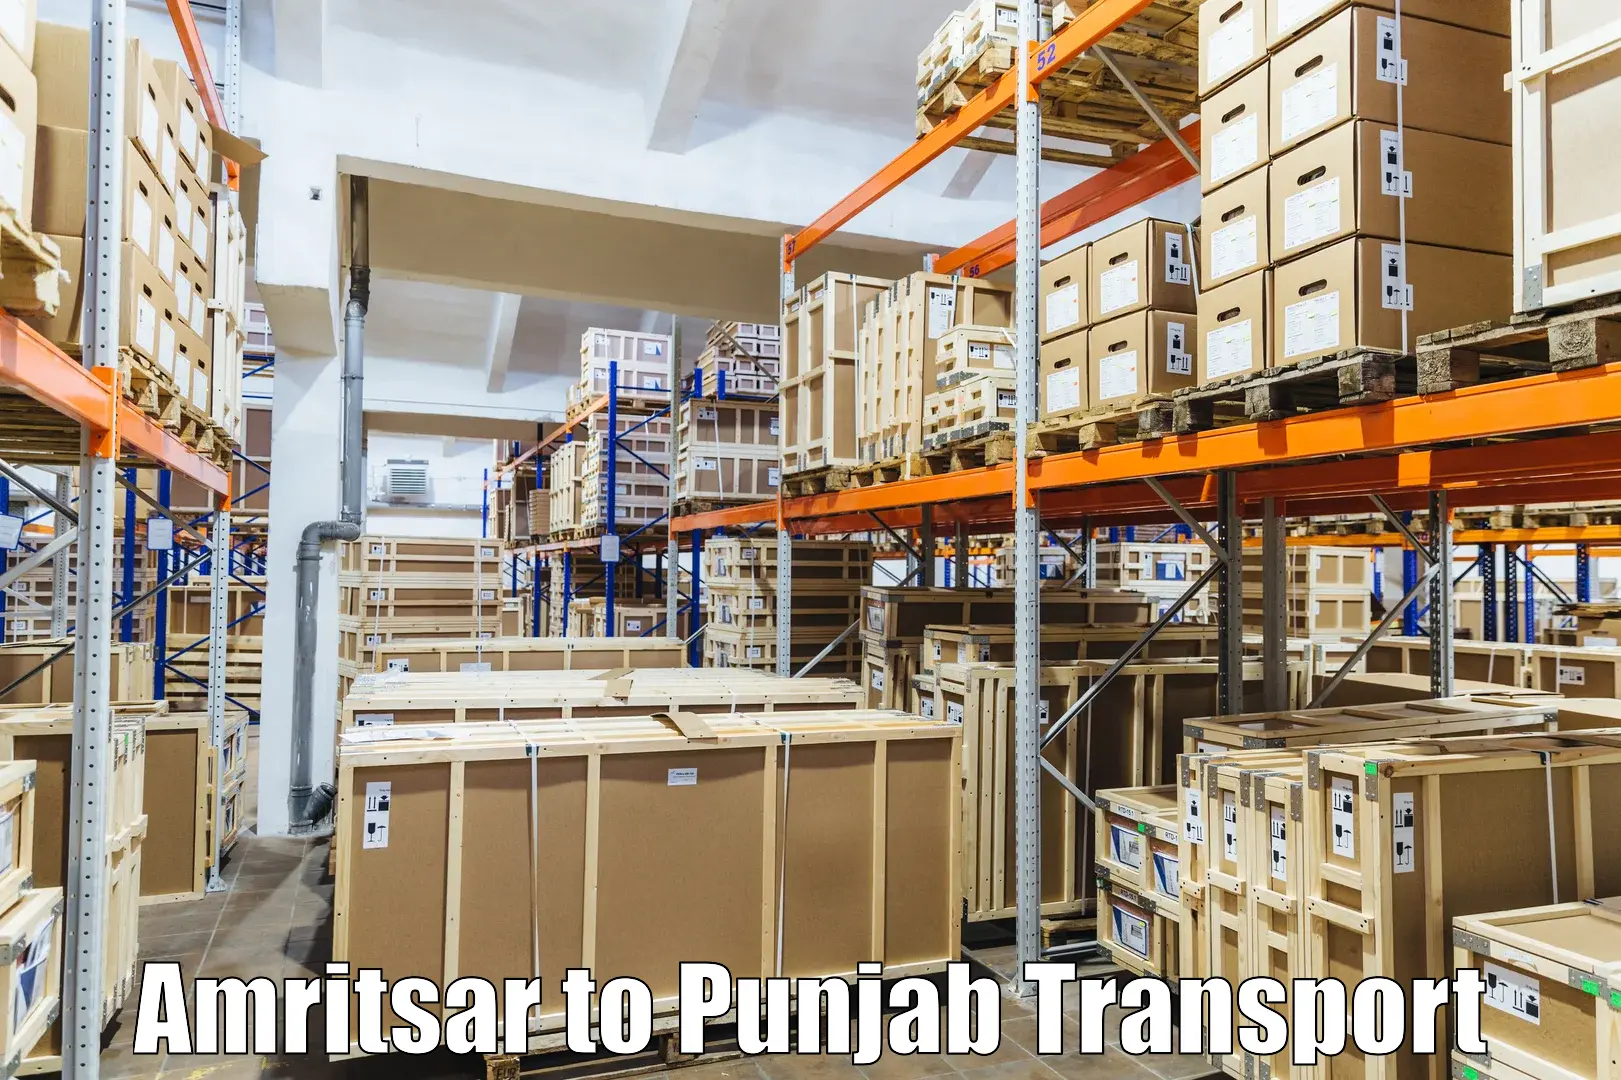 Transport in sharing Amritsar to Mohali